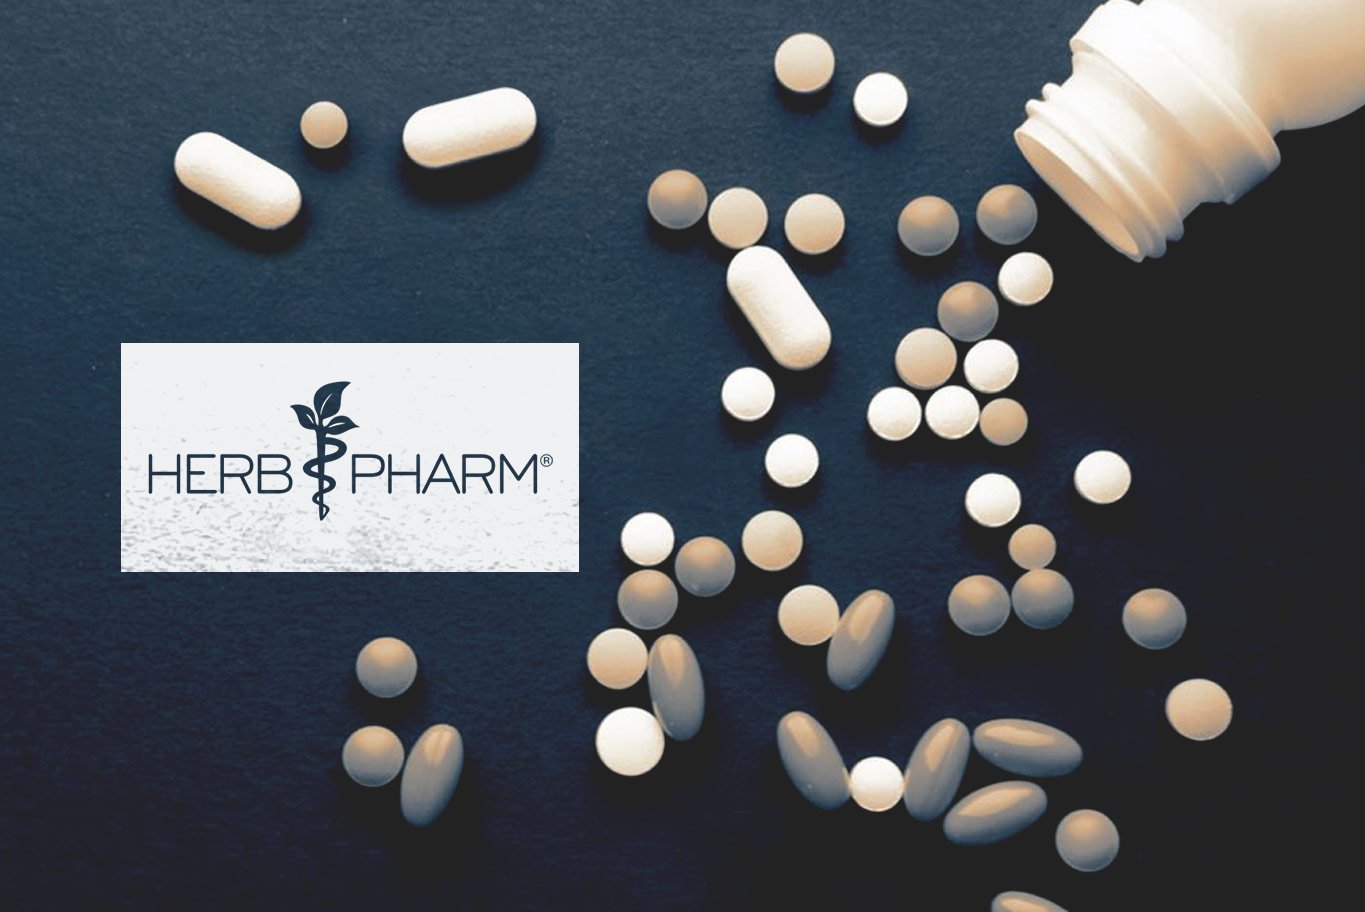 herb pharm supplements logo banner